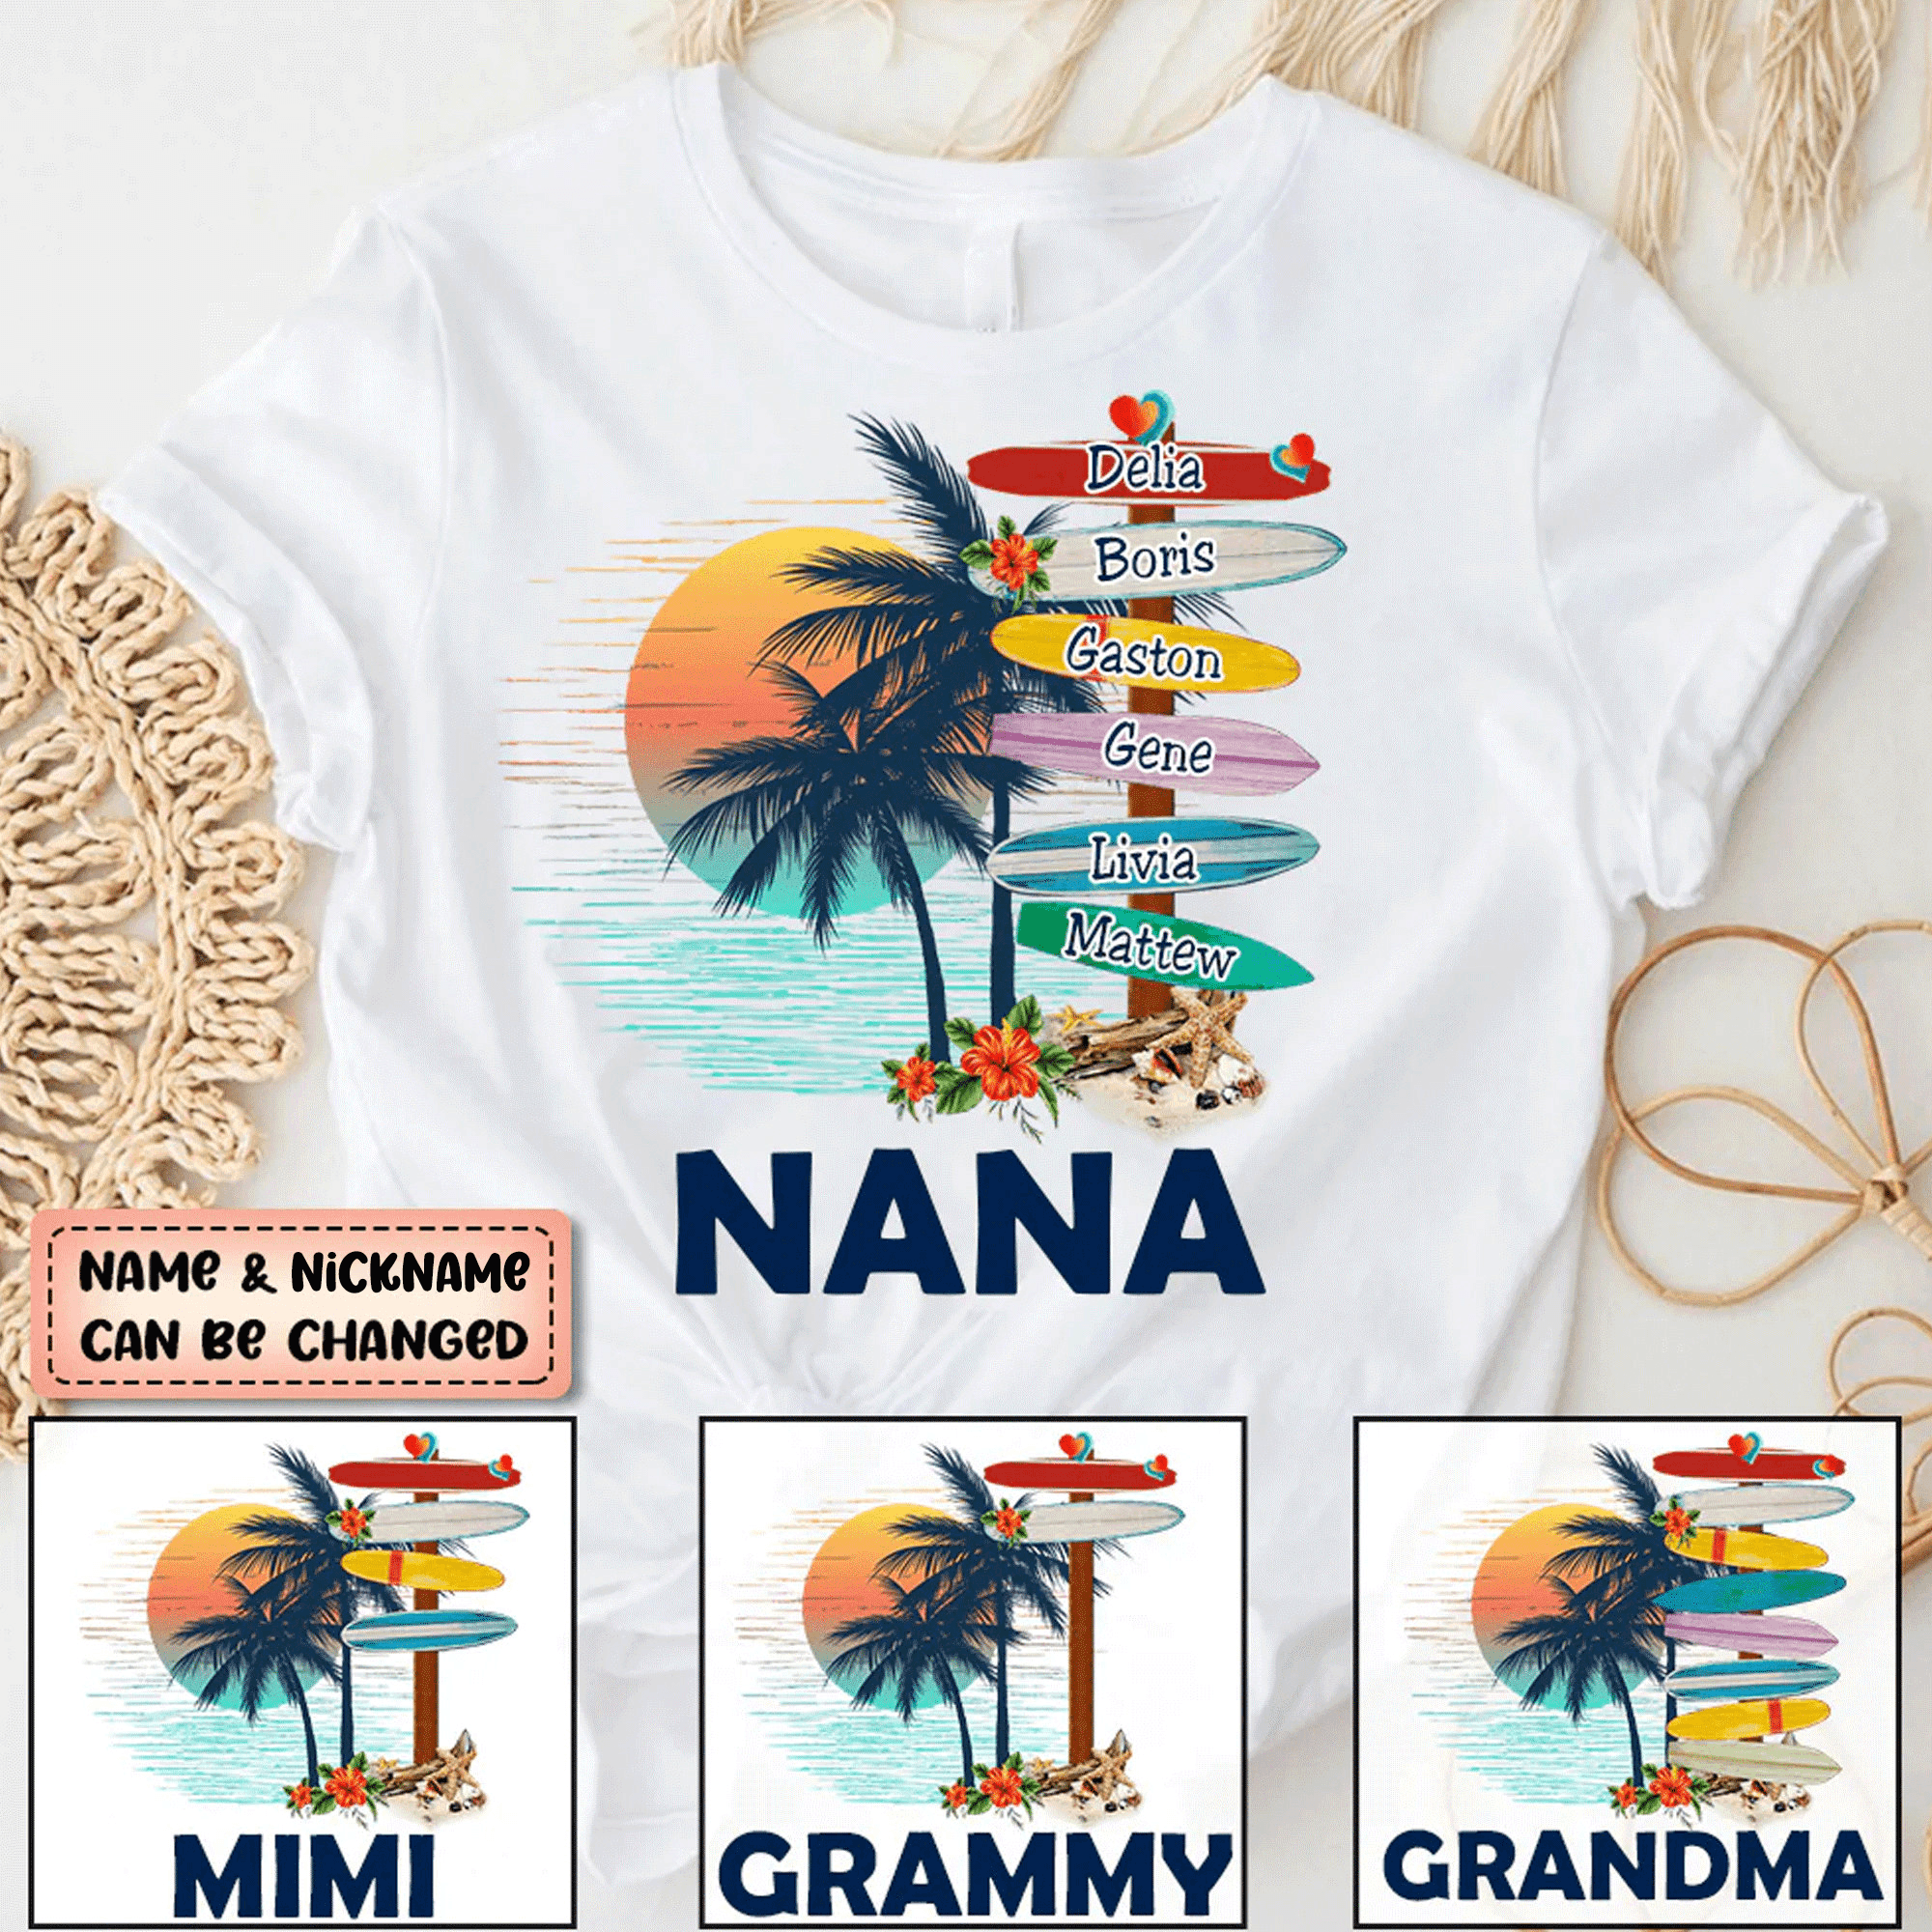 Grandma Surfboards Summer Vacation - Personalized Custom T Shirt - Summer Gift for Grandma/Nana/Mimi, Mom, Wife, Grandparent